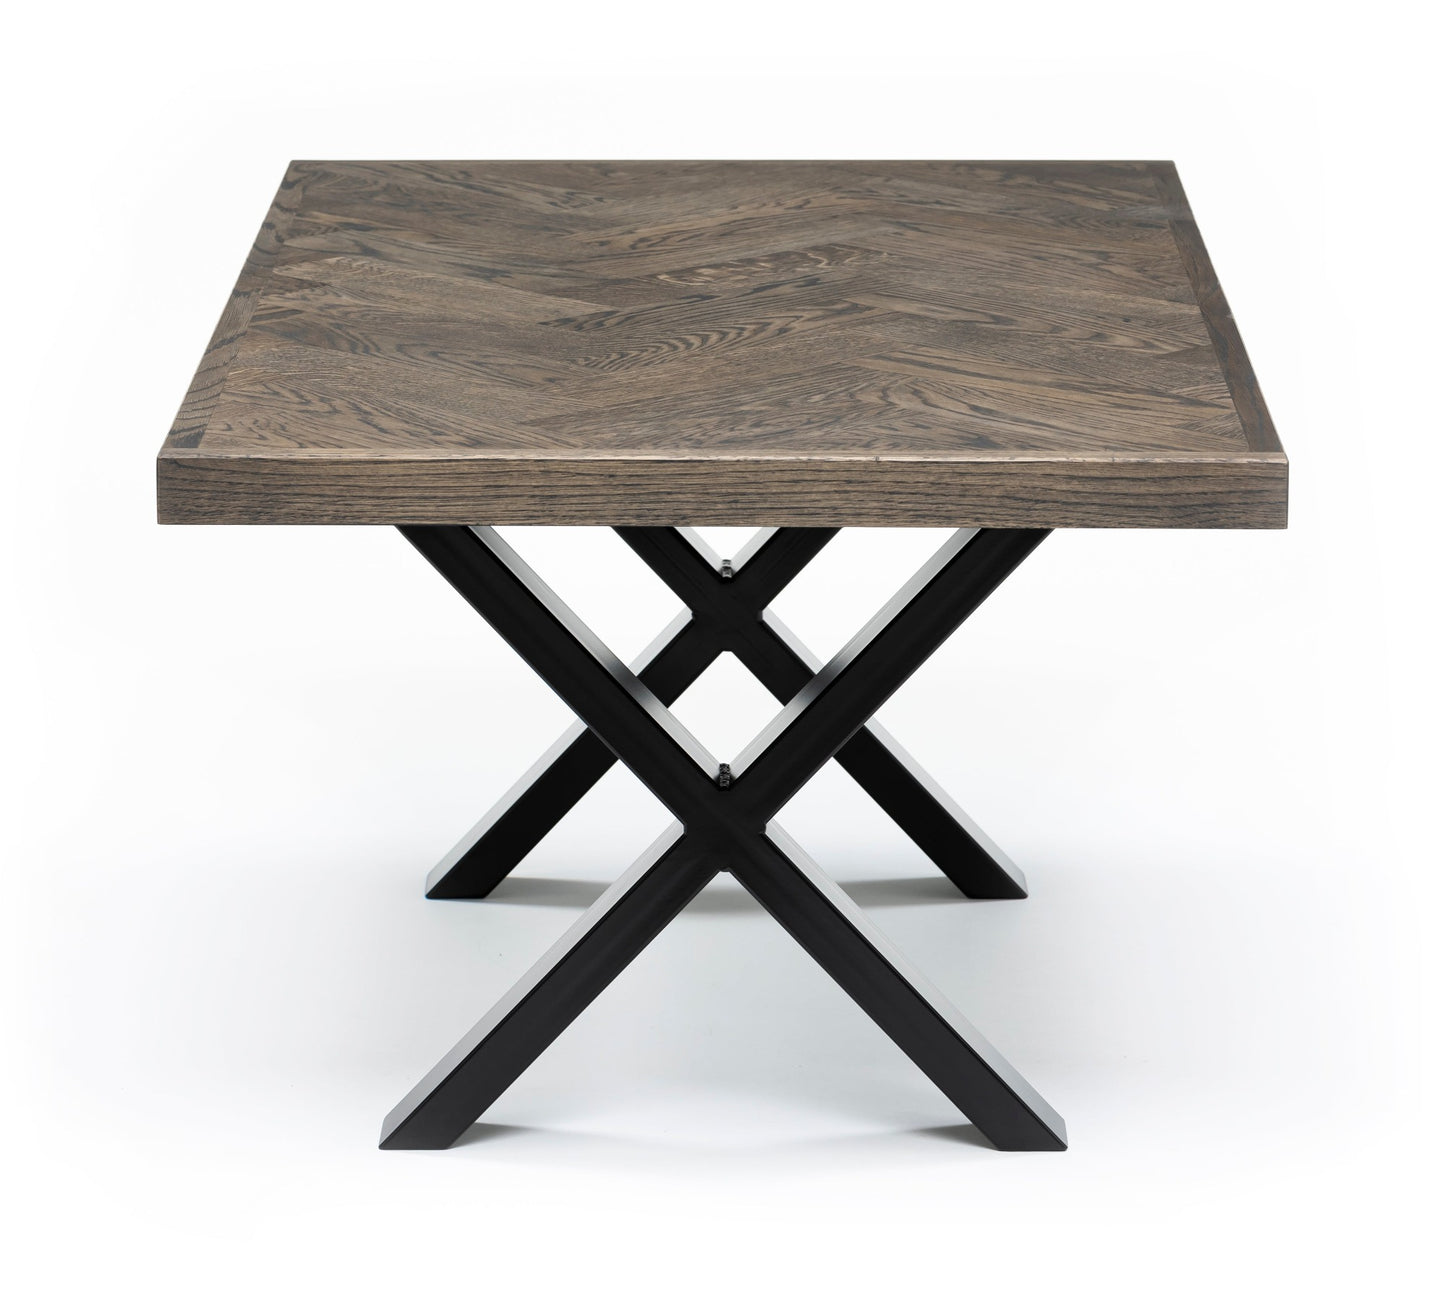 Parquete oak coffee table